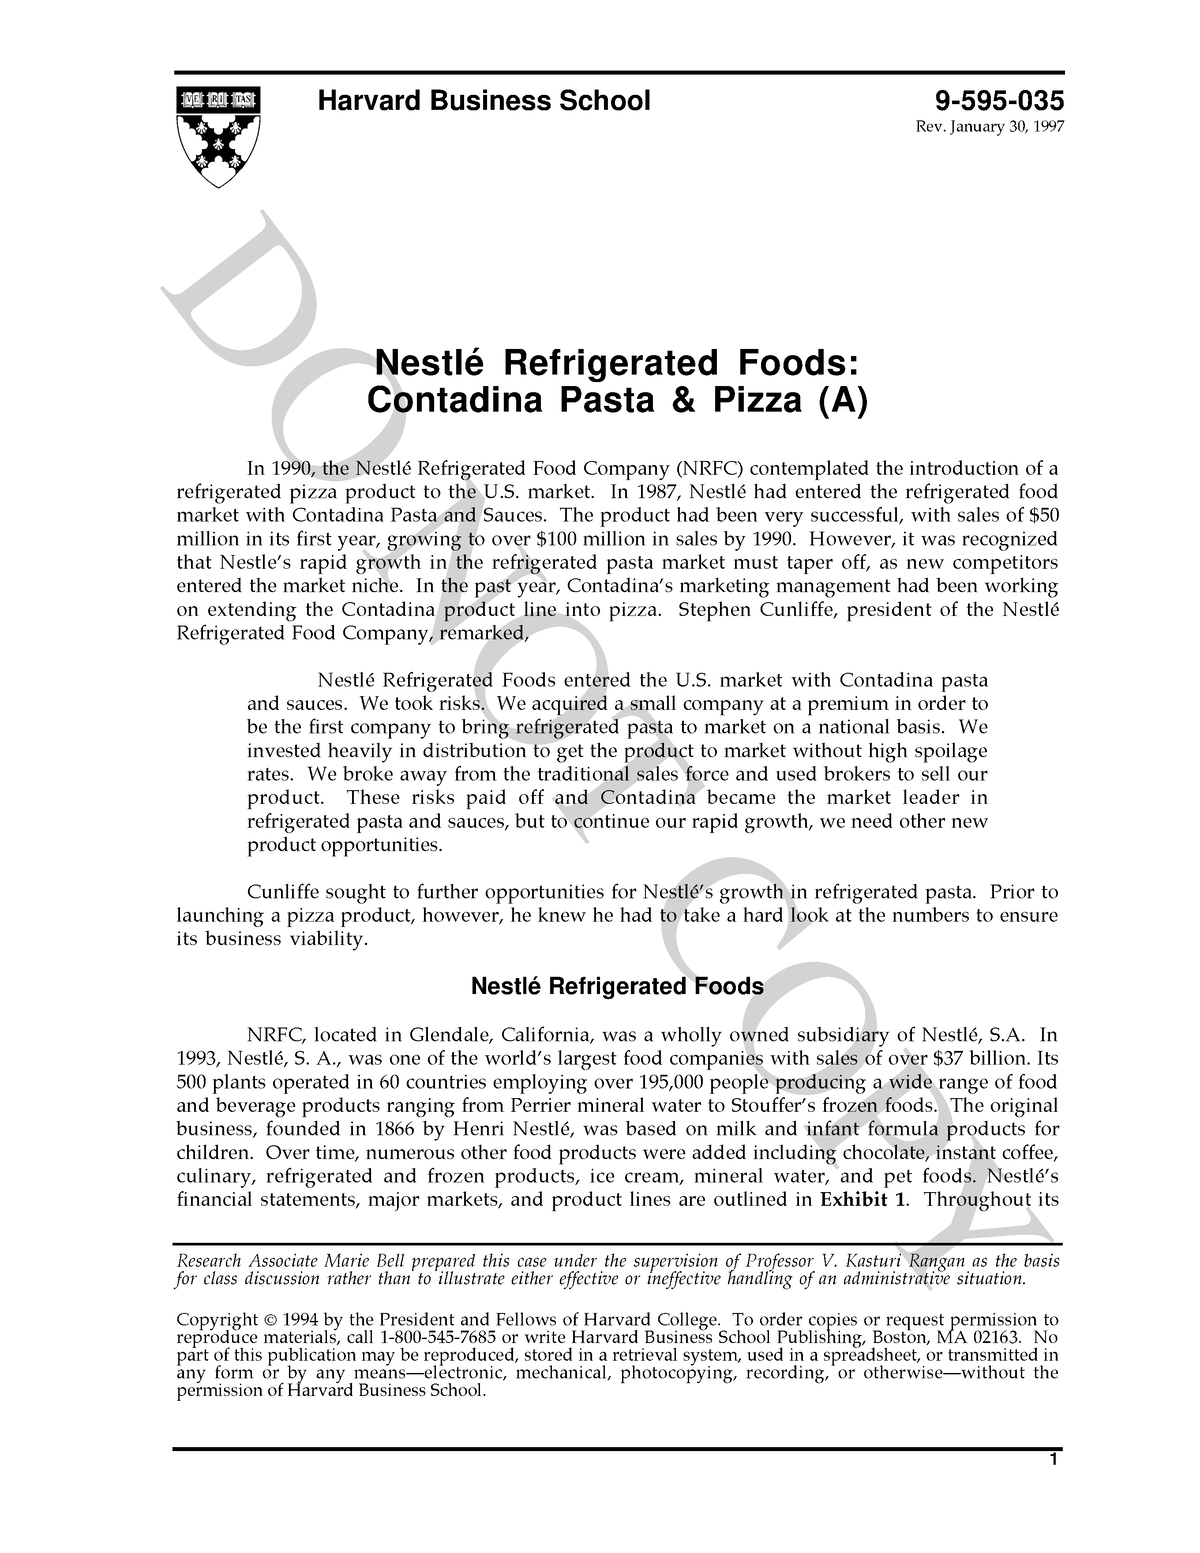 nestle contadina pizza case study spreadsheet